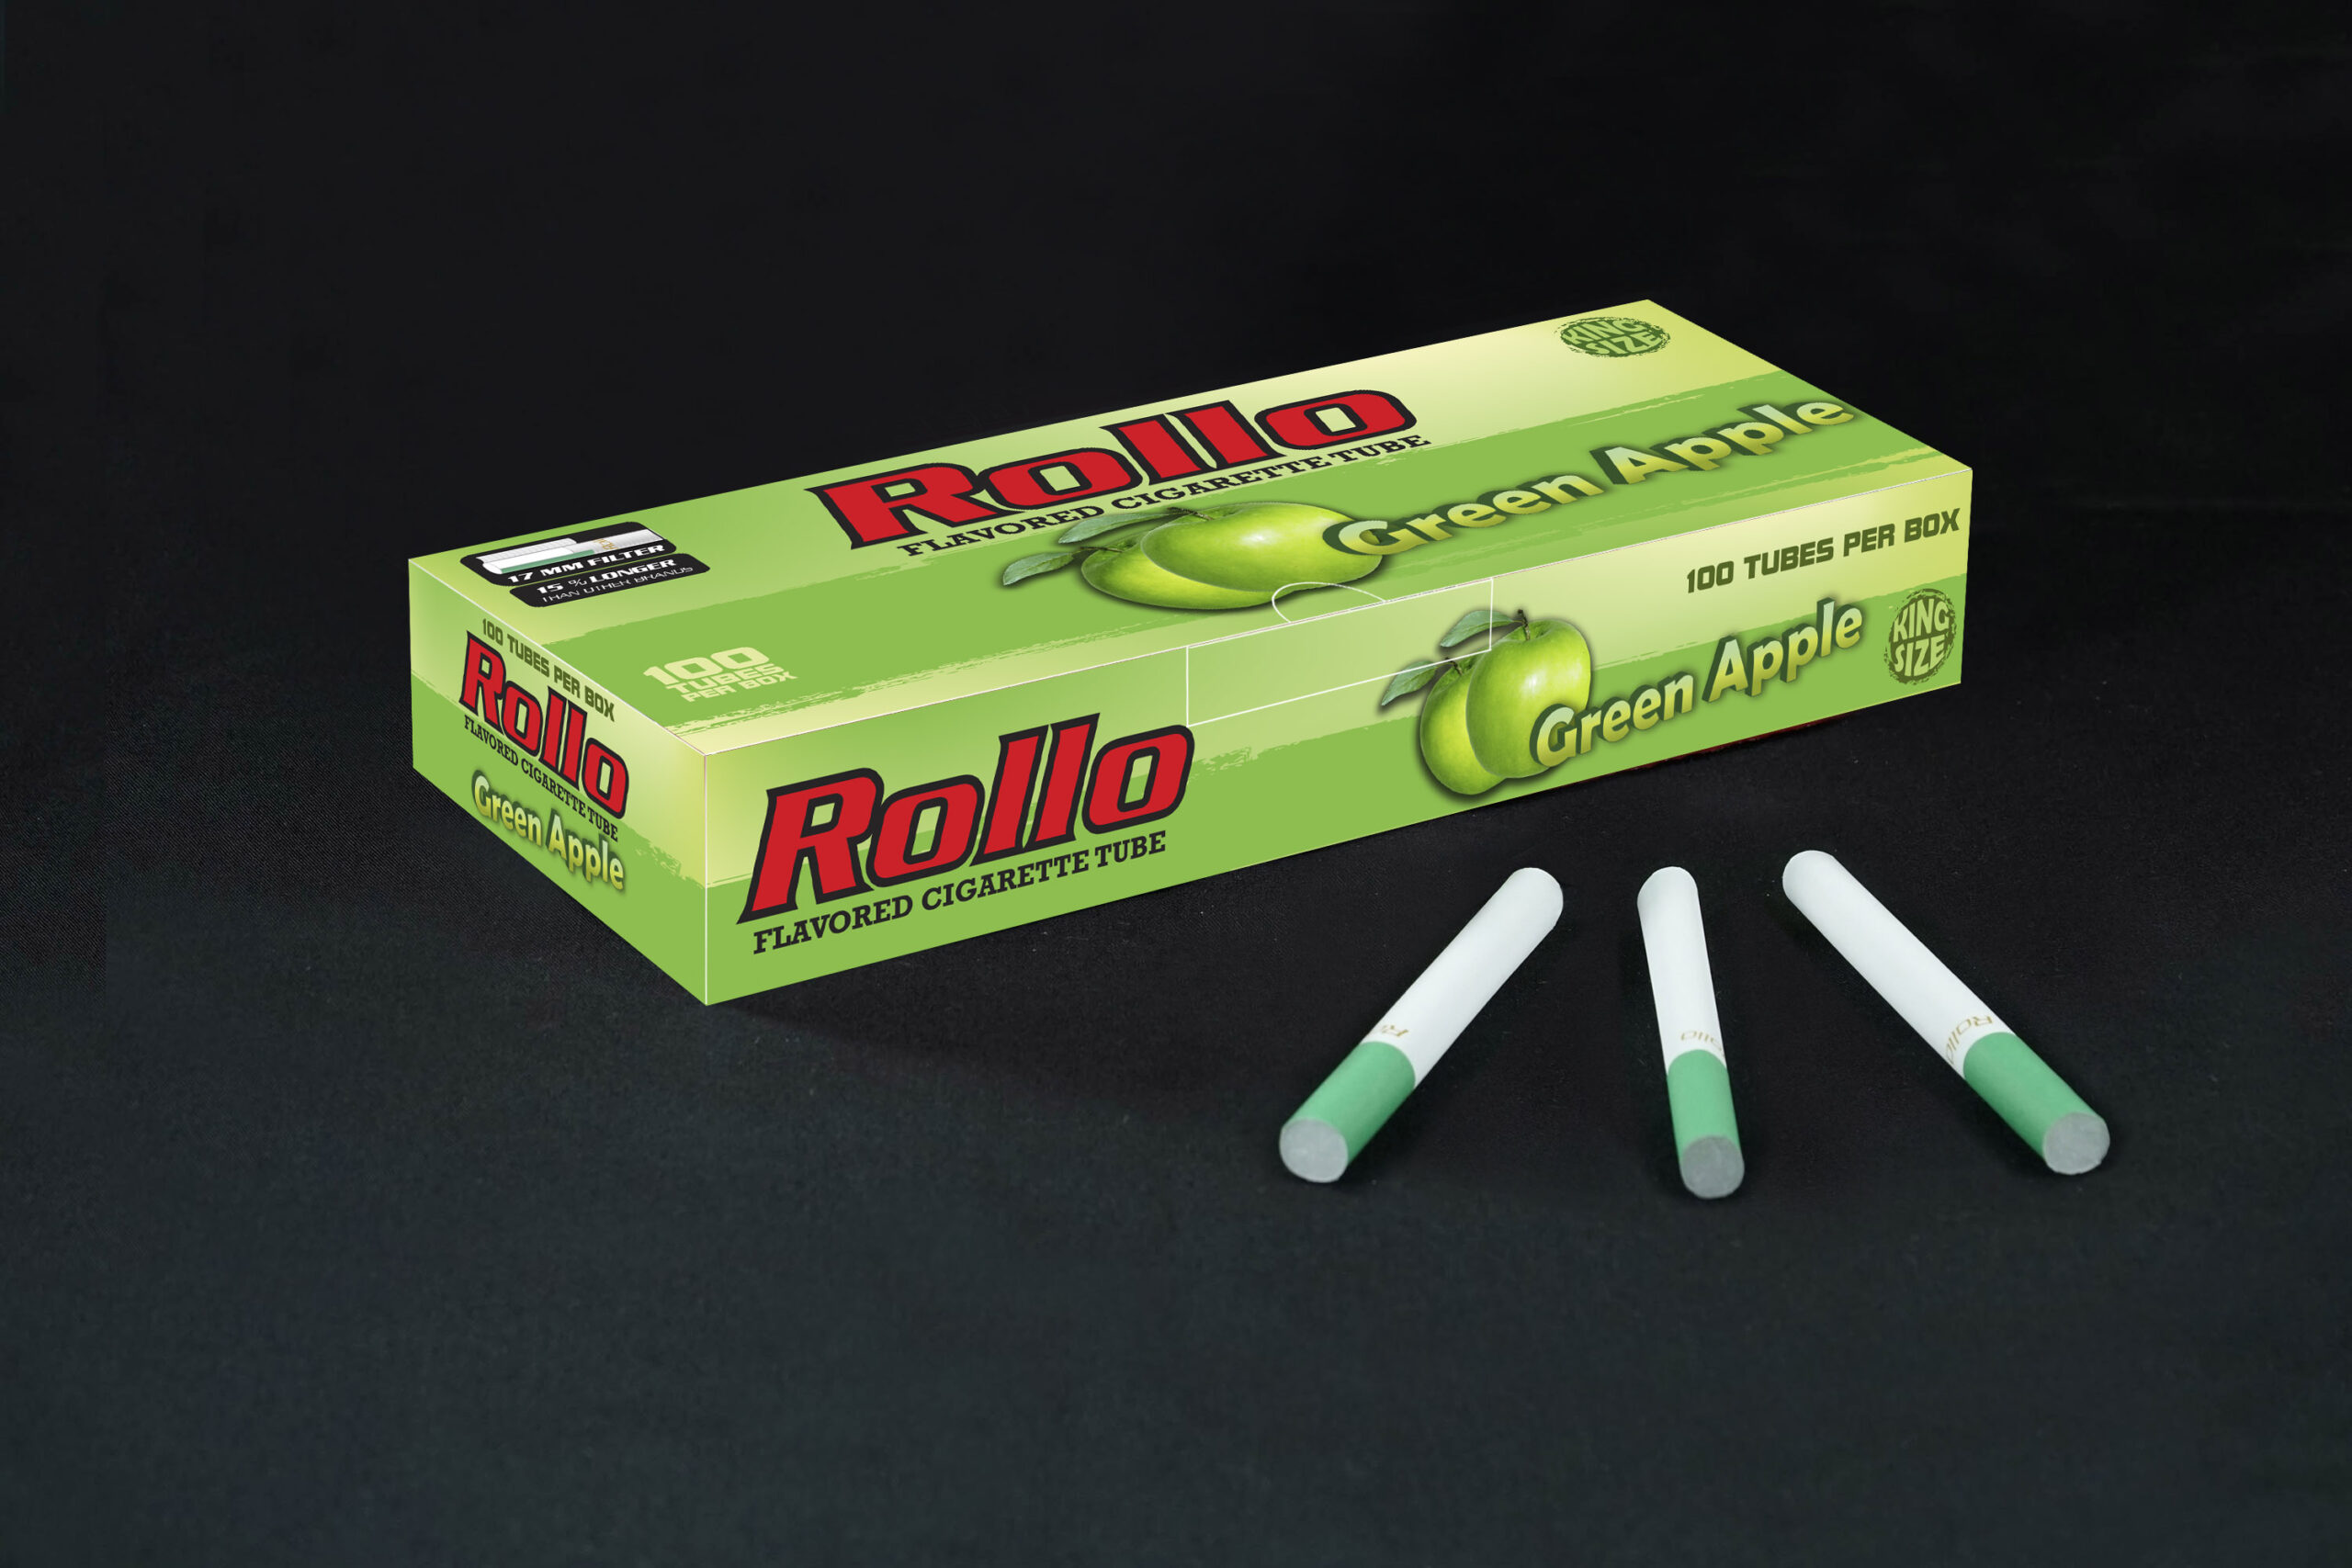 Flavoured Cigarette Tubes Rollo Green Apple 100 CT